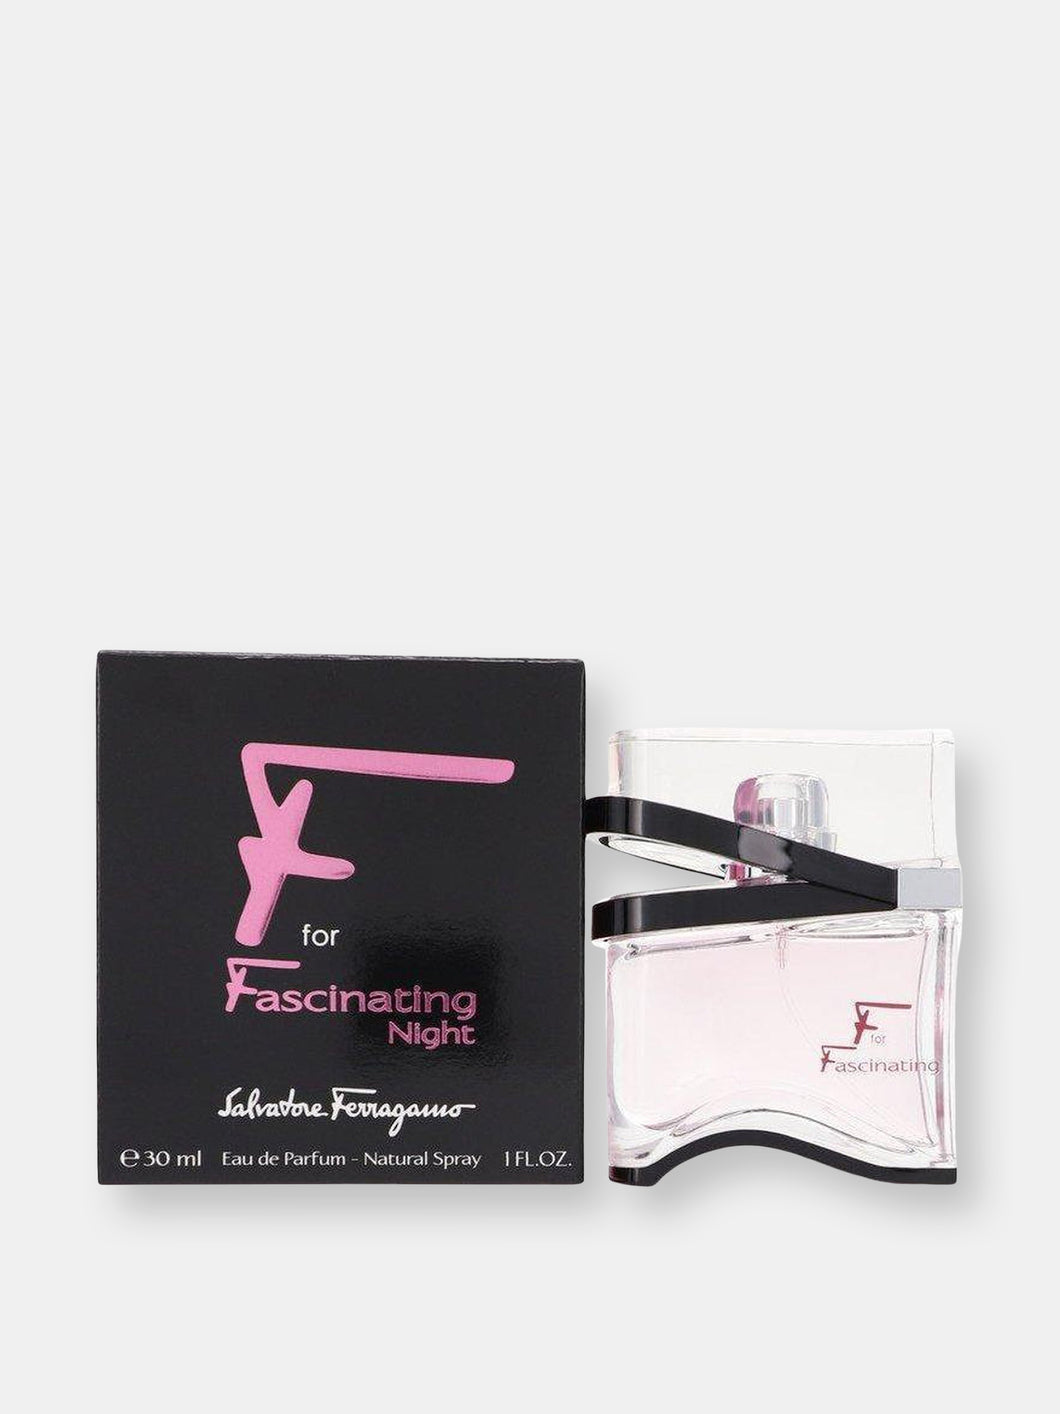 F for Fascinating Night by Salvatore Ferragamo Eau De Parfum Spray 1 oz